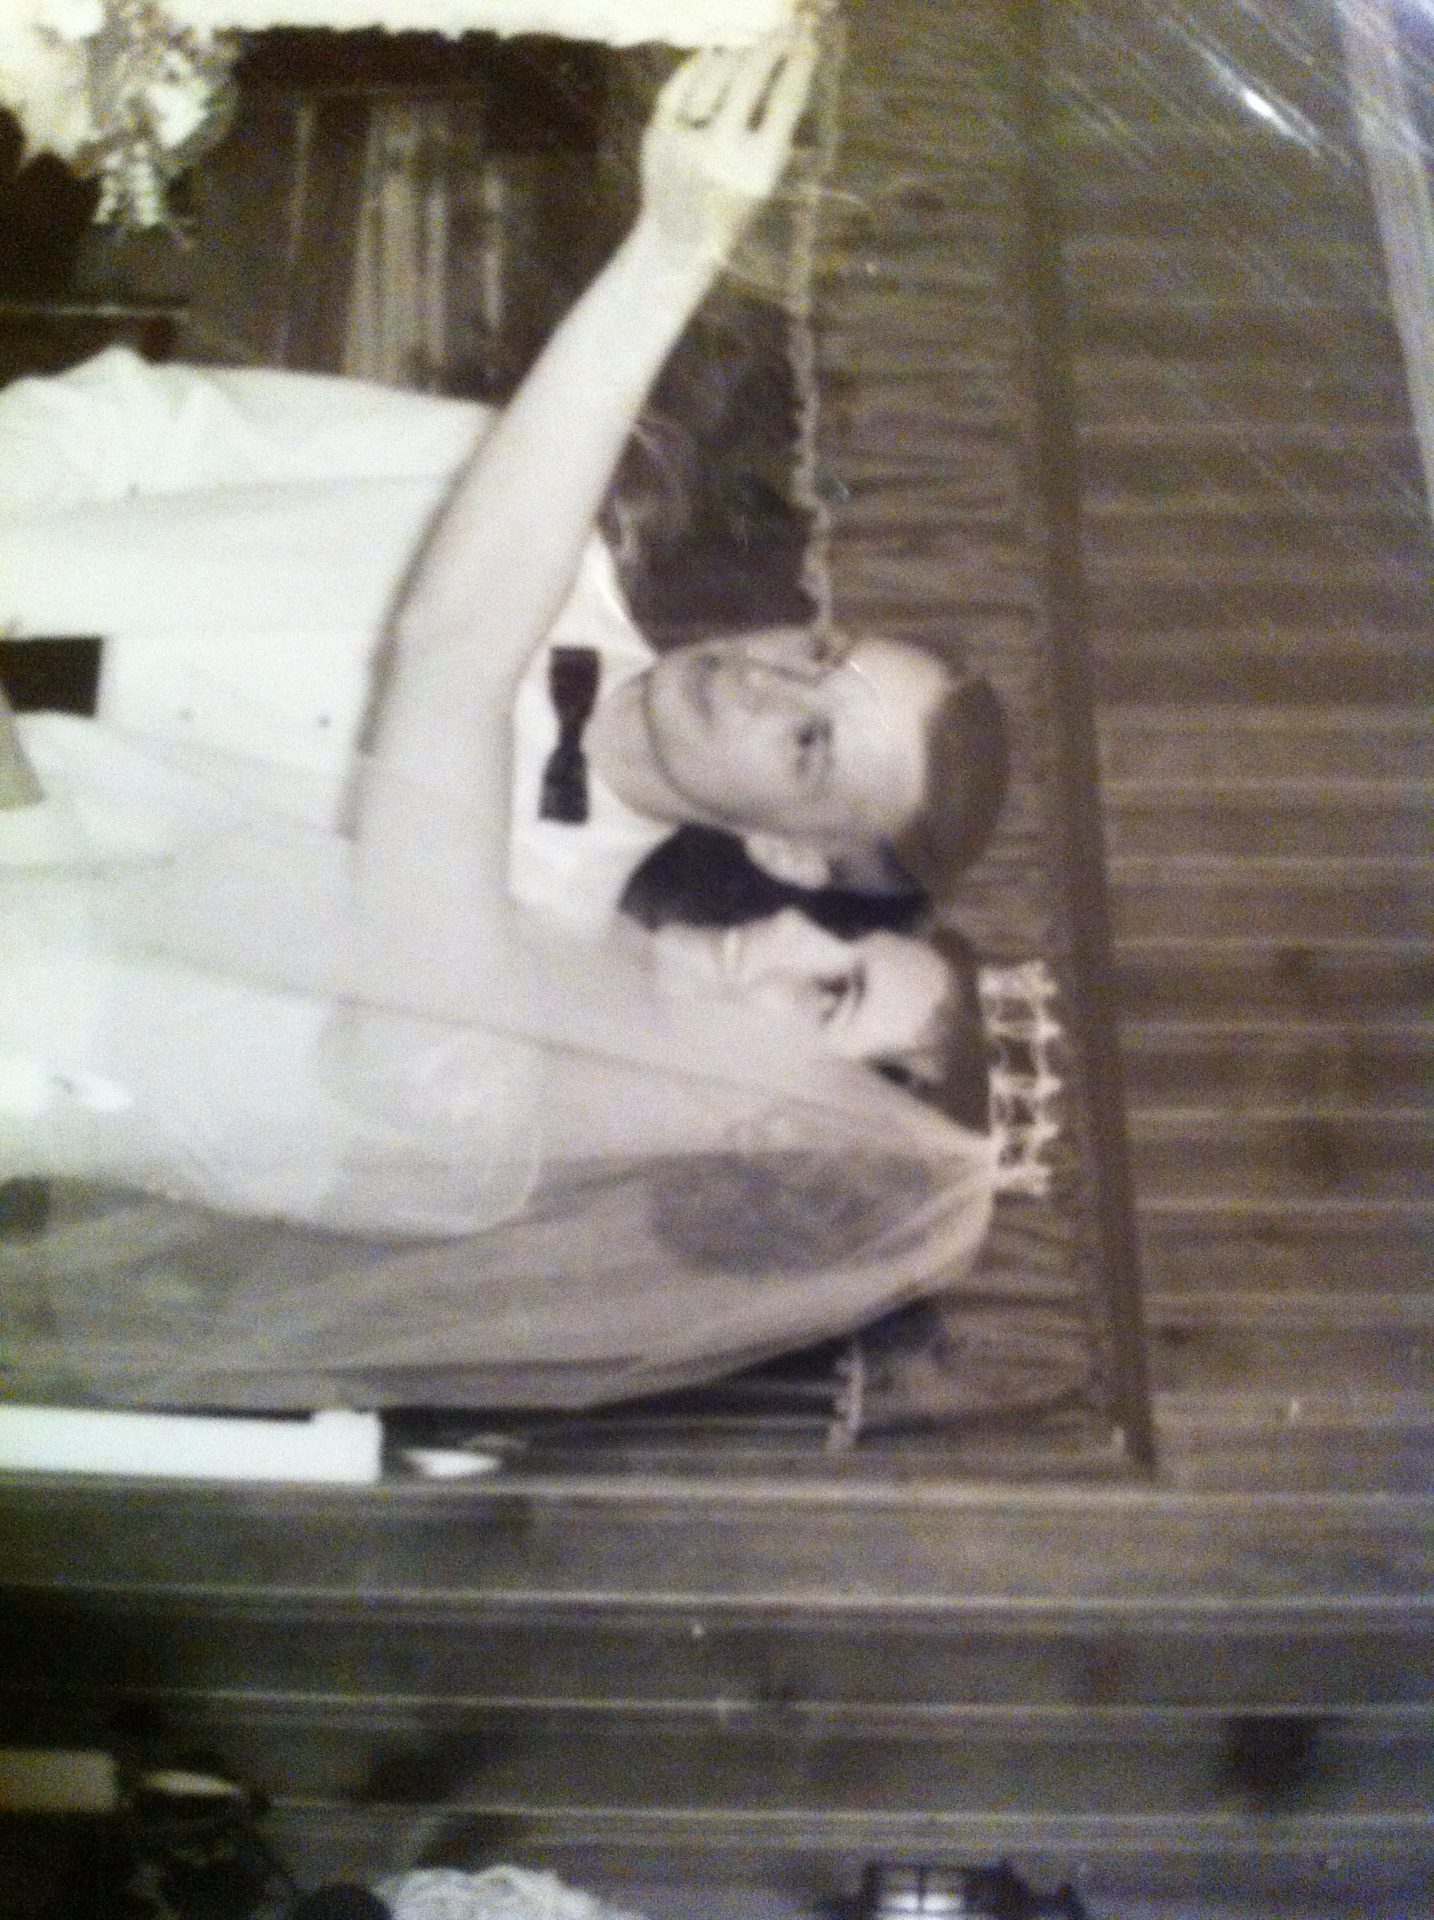 Sonia and Bob’s wedding 1960